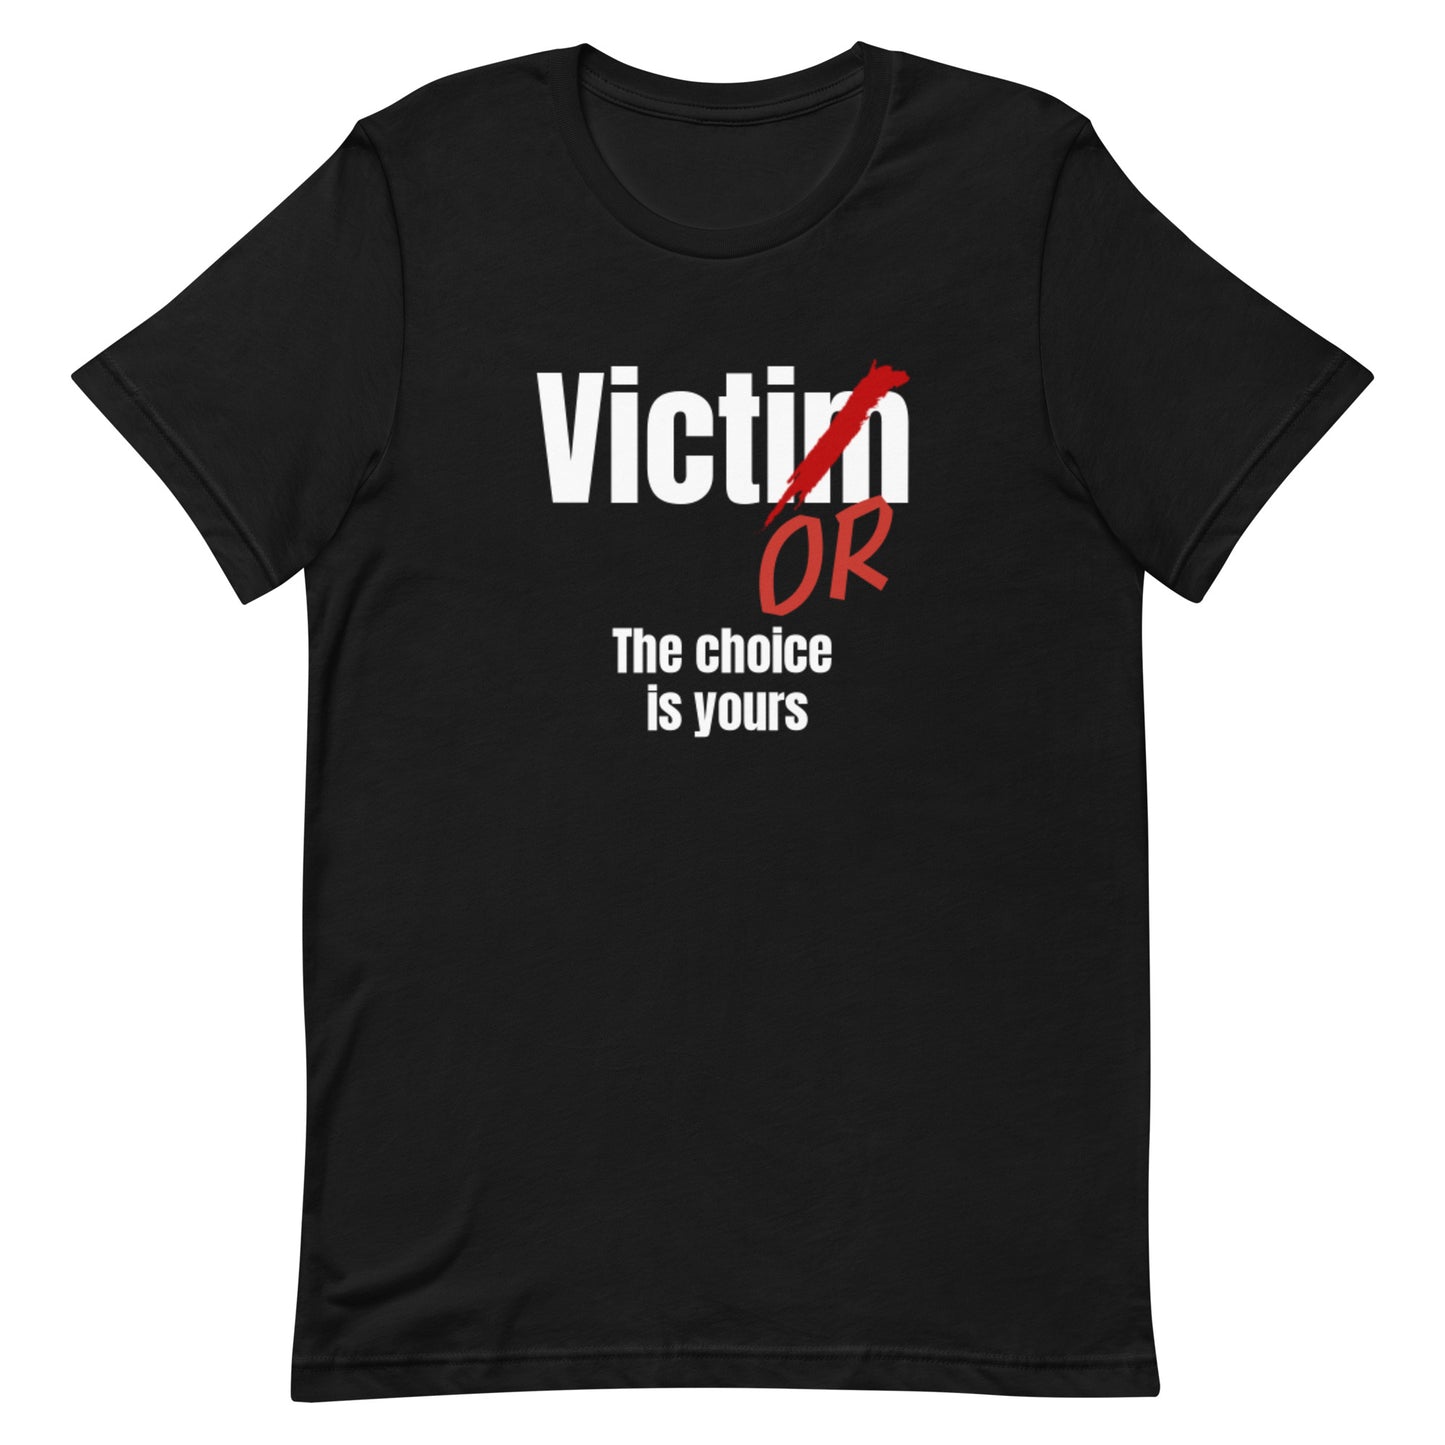 Unisex t-shirt "Victor"